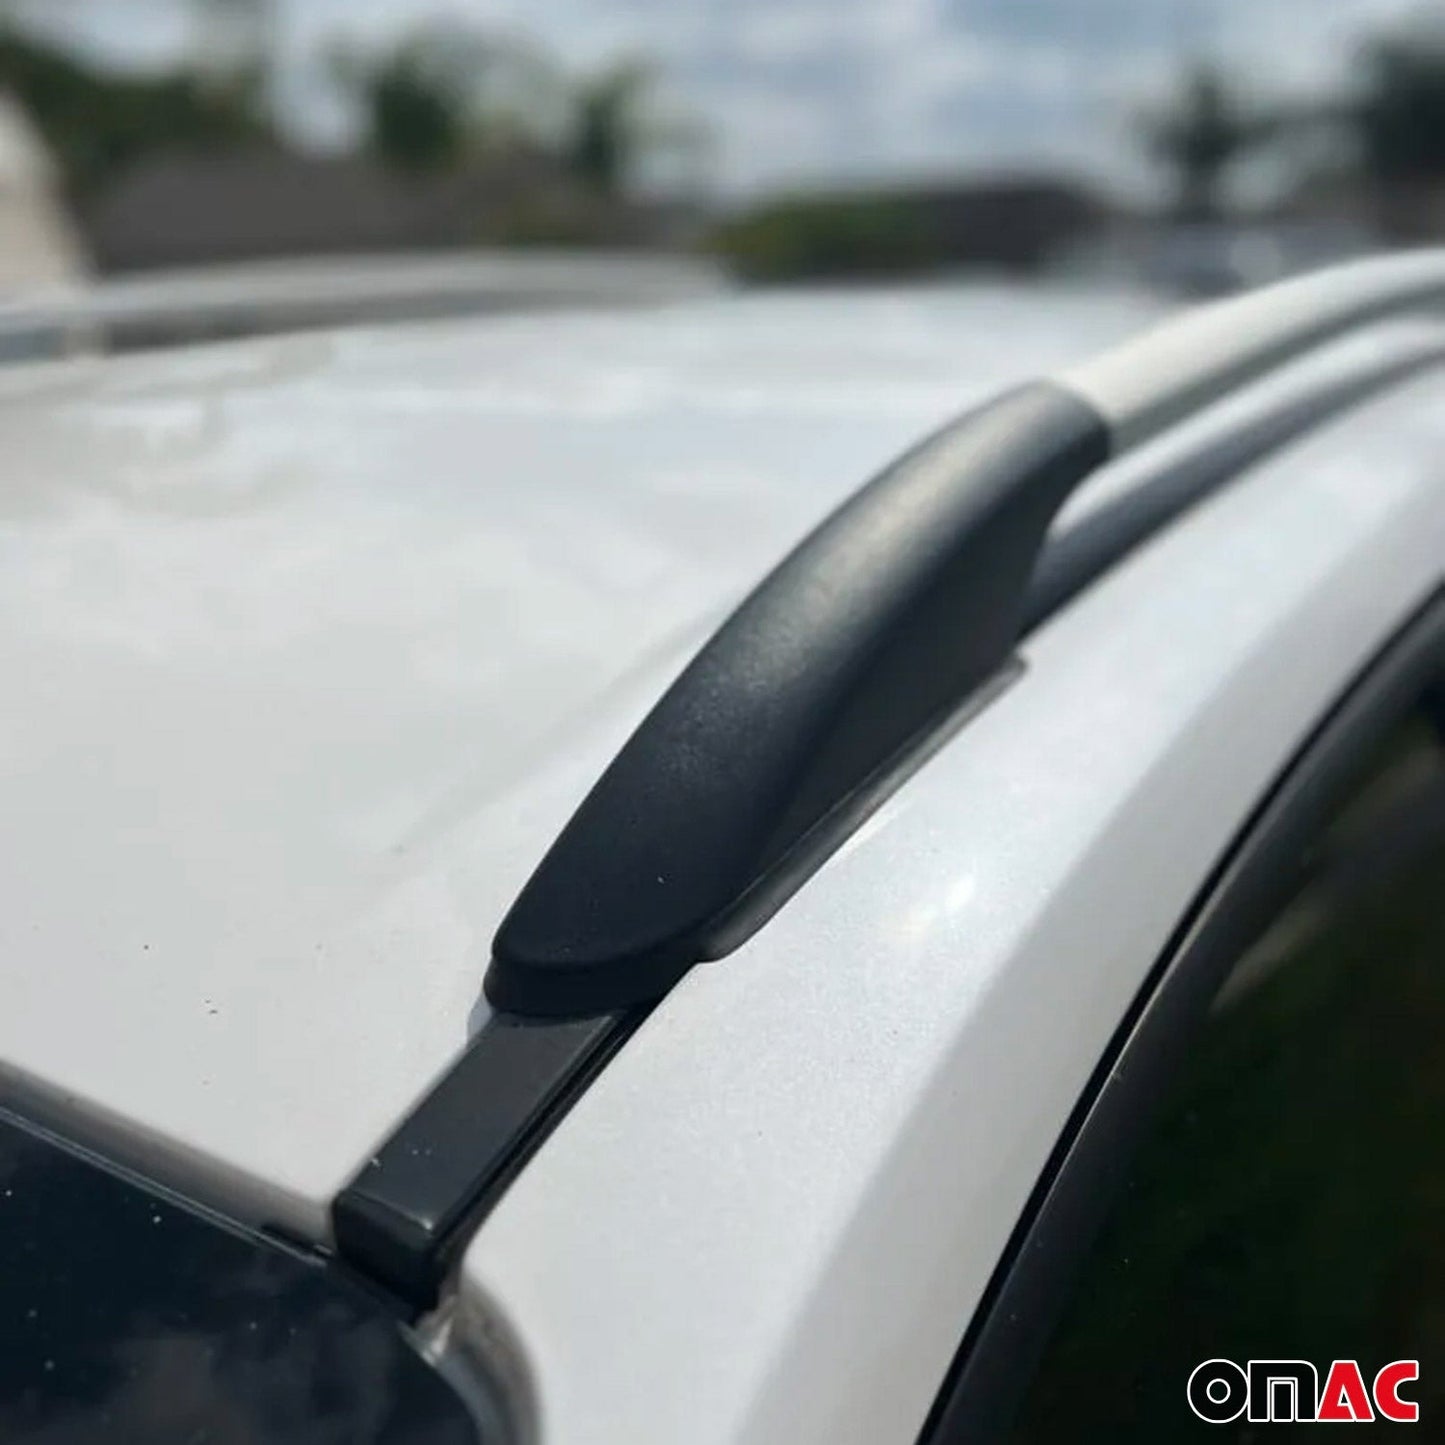 OMAC Roof Rack Side Rails Aluminium for Isuzu D-Max 2012-2019 Silver 2Pcs U012876